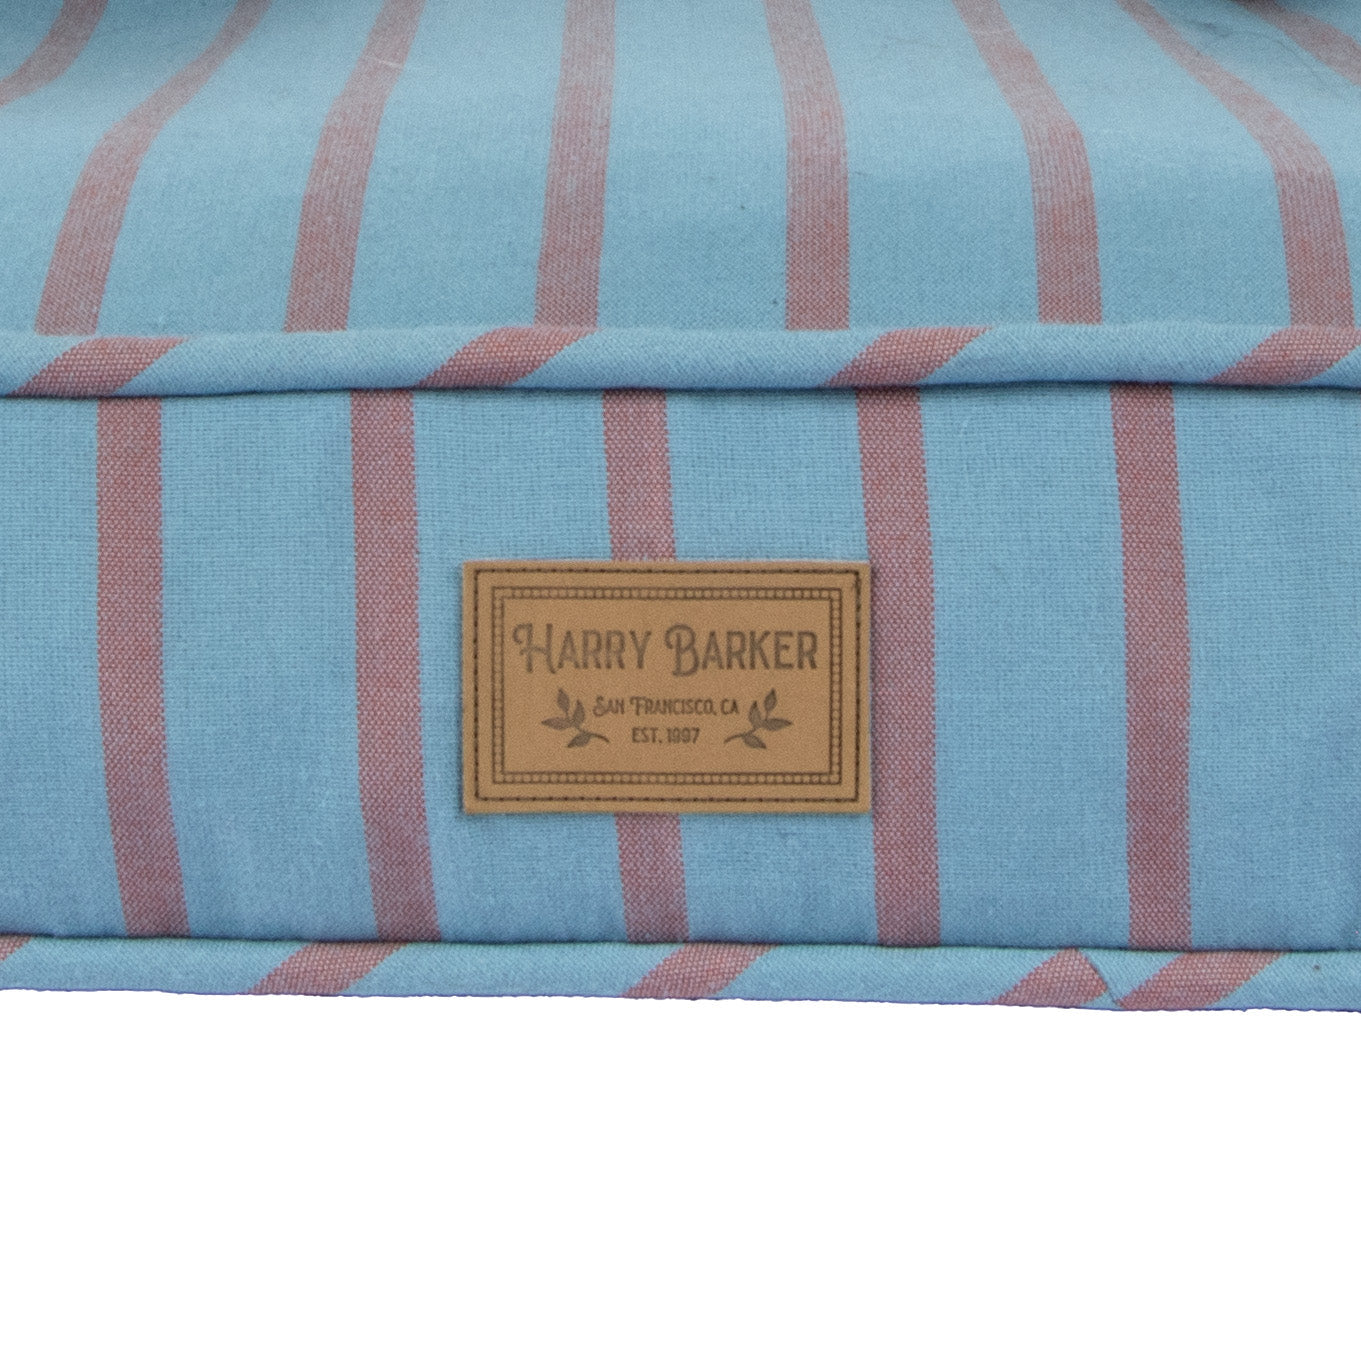 harry barker logo on striped pet bed